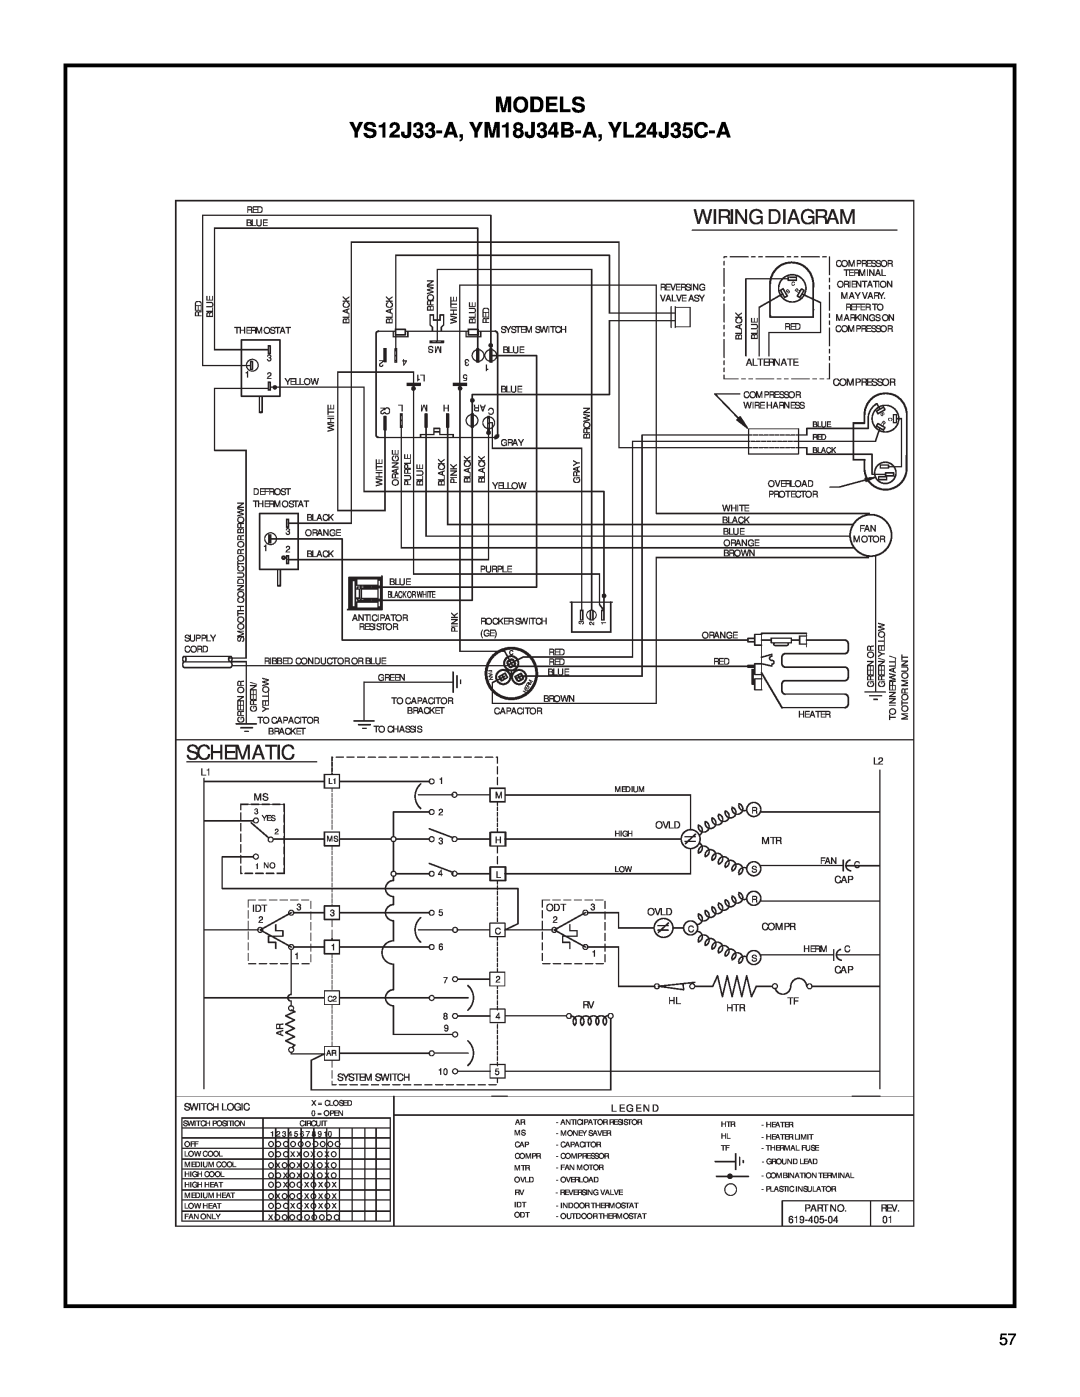 Friedrich racservmn service manual YS12J33-A, YM18J34B-A, YL24J35C-A, Models, Wiring Diagram, Schematic 